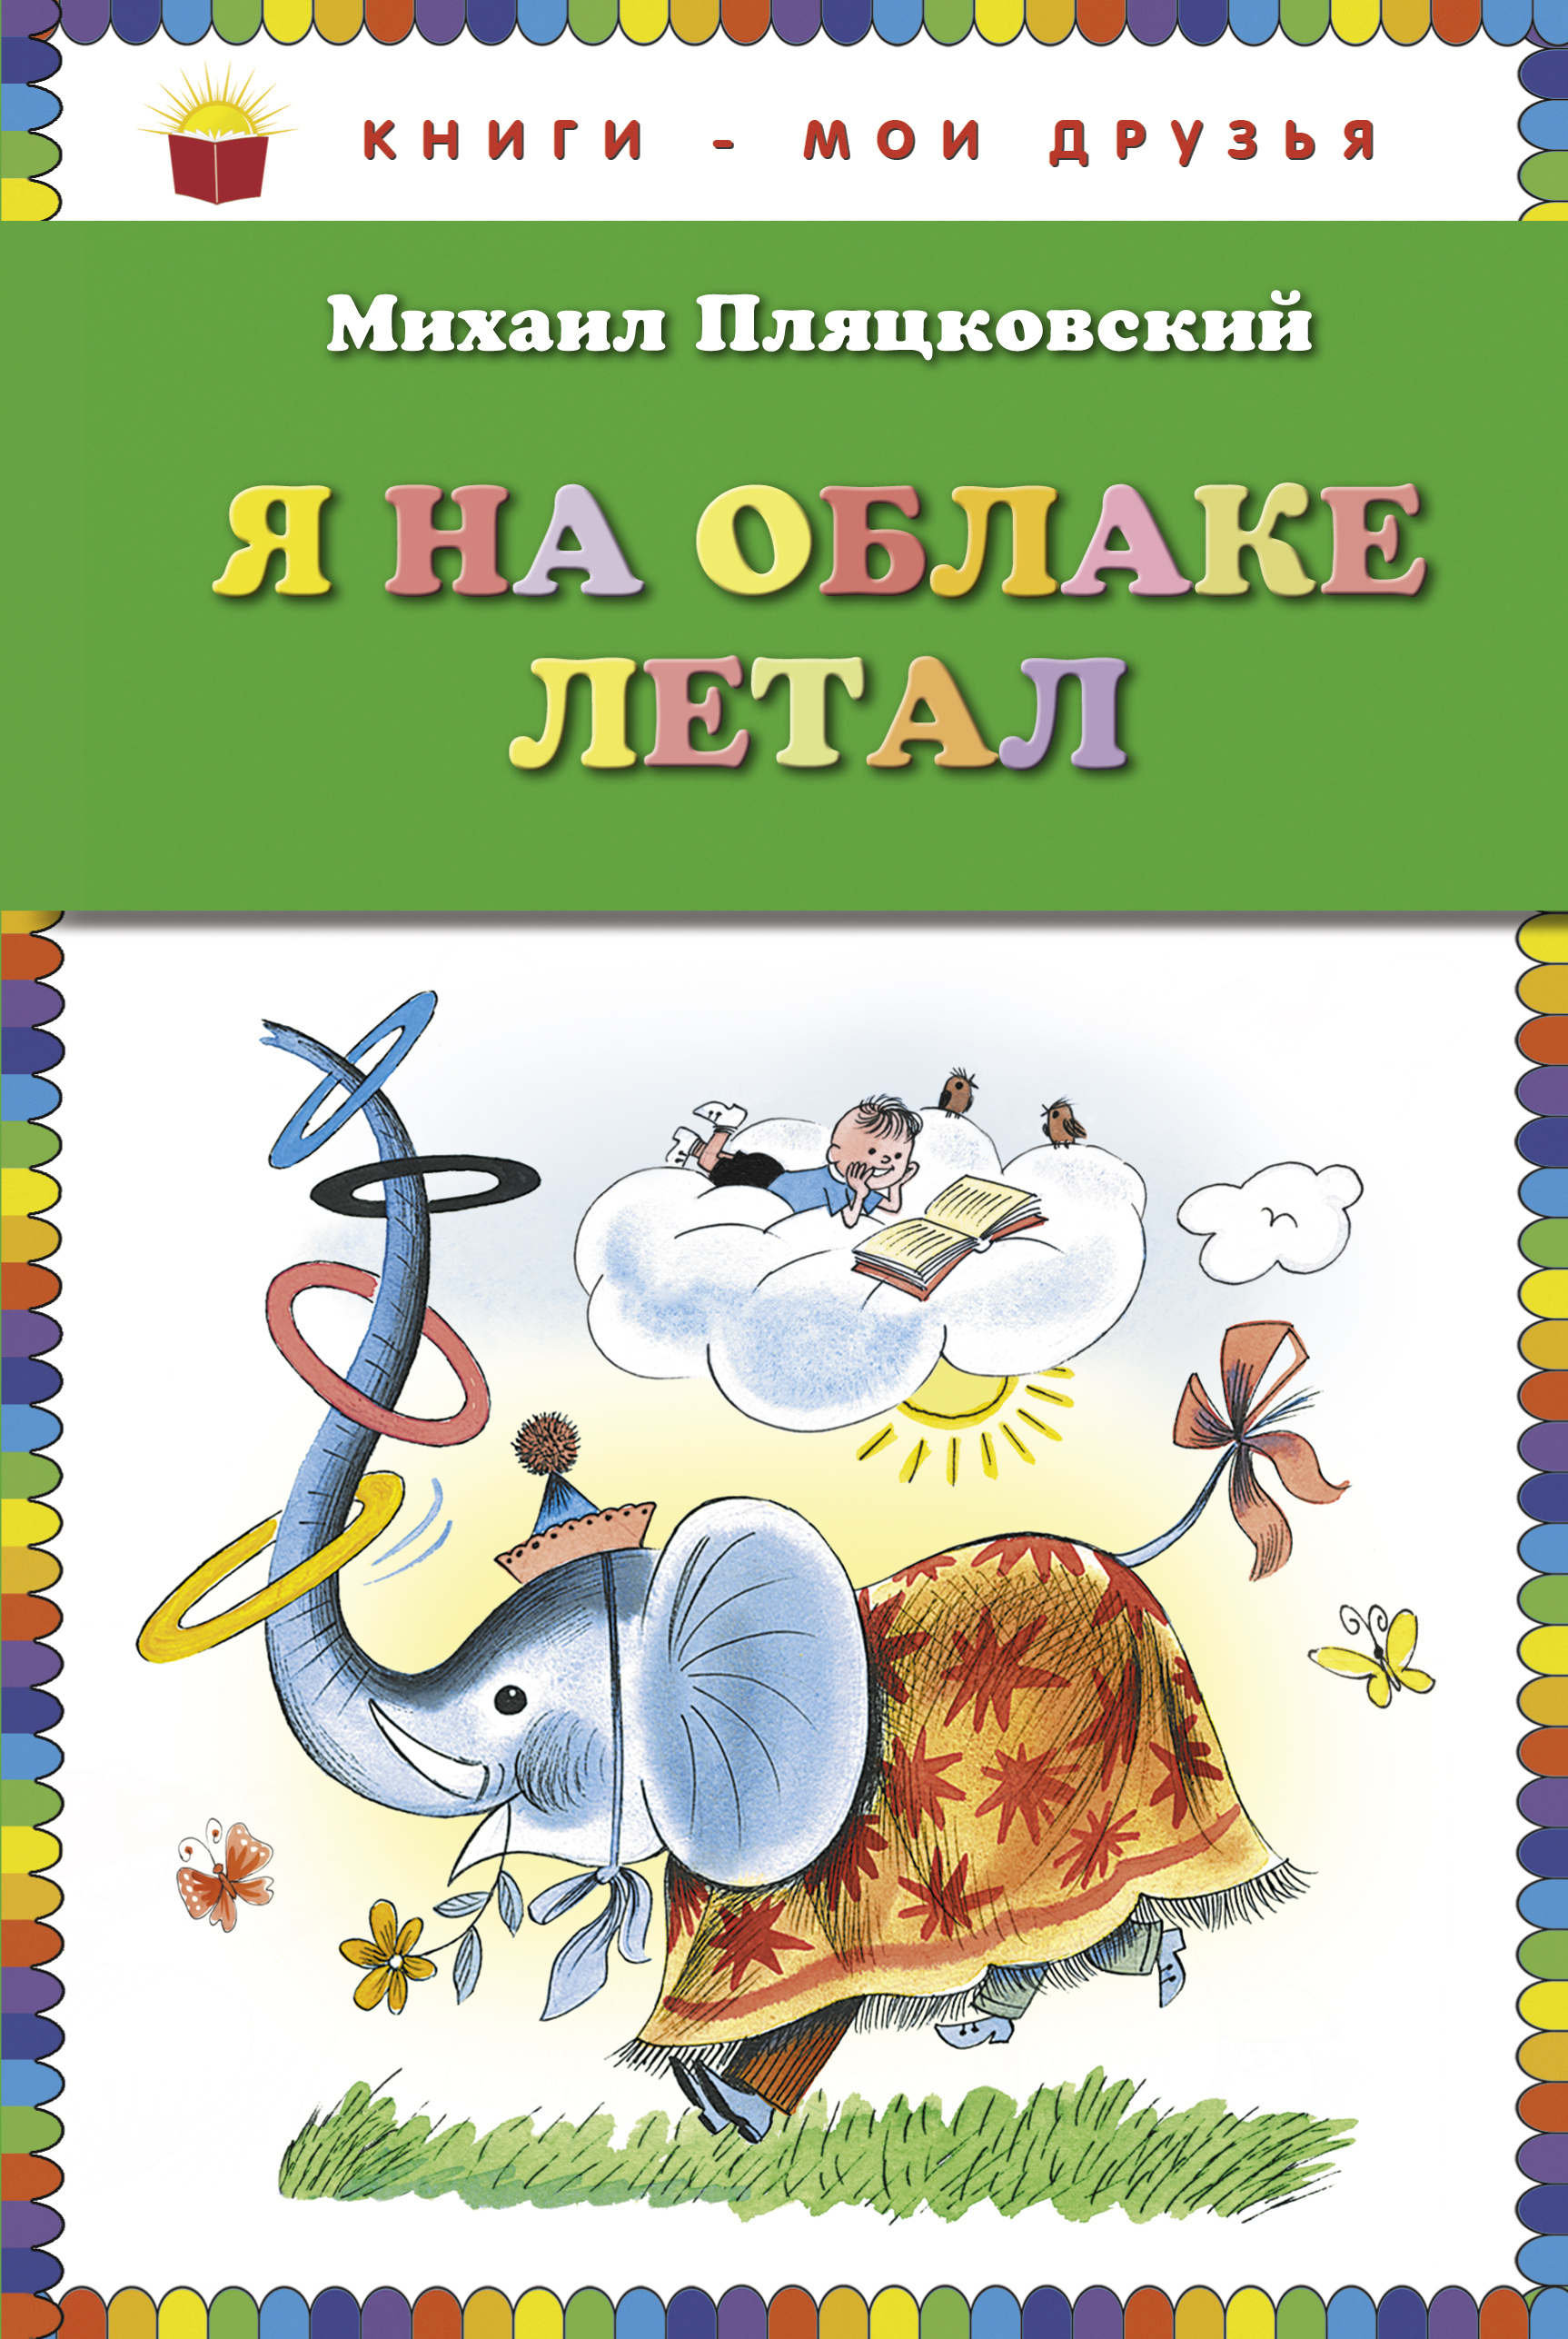 Михаил Пляцковский книги